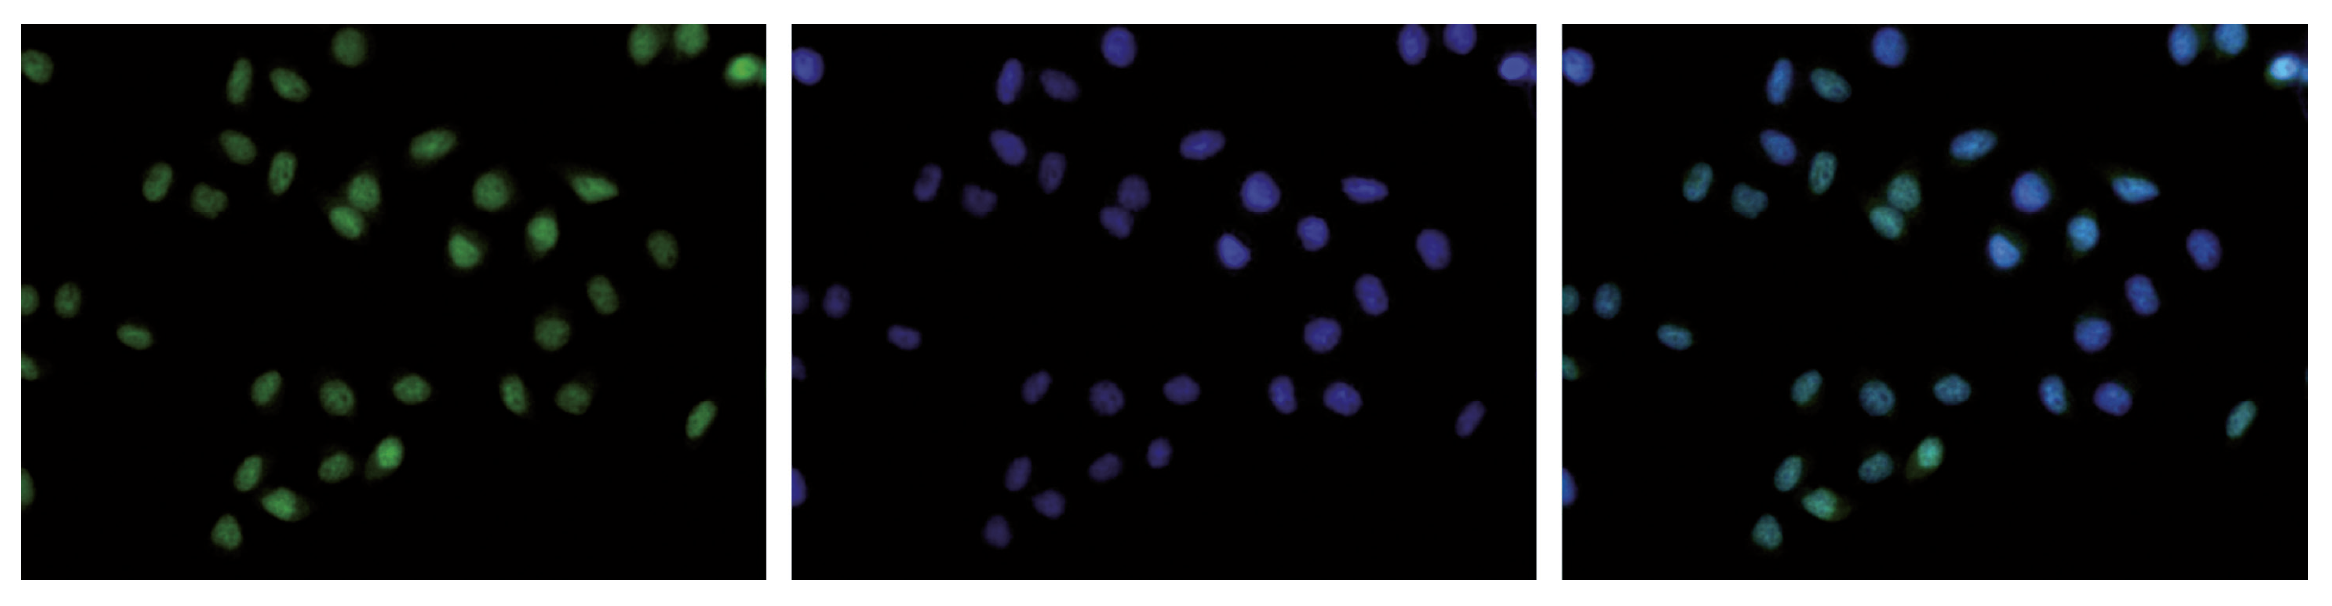 H3K36me3 Antibody for Immunofluorescence 